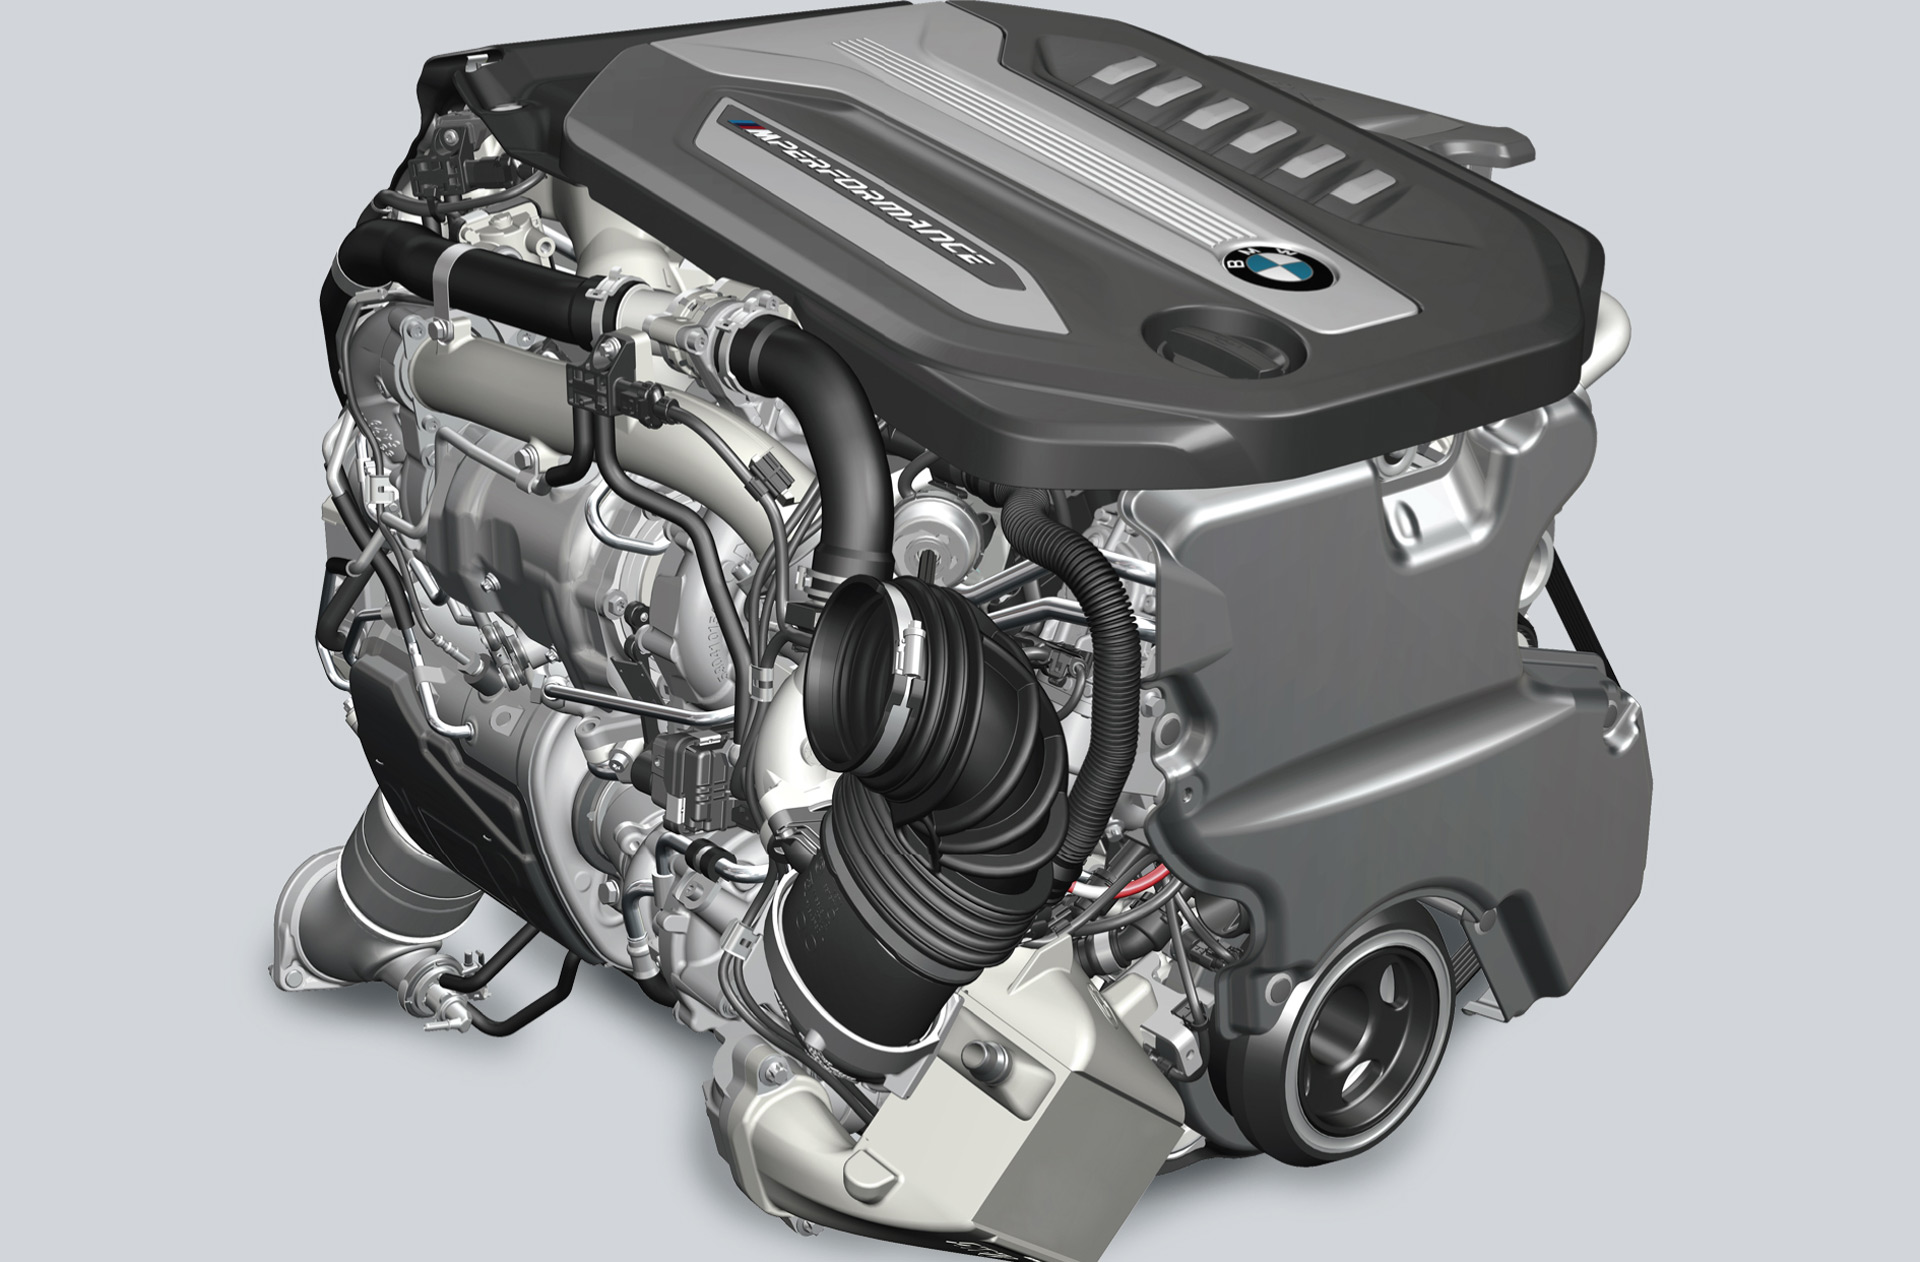 Full Details On Bmw S New Quad Turbocharged Diesel